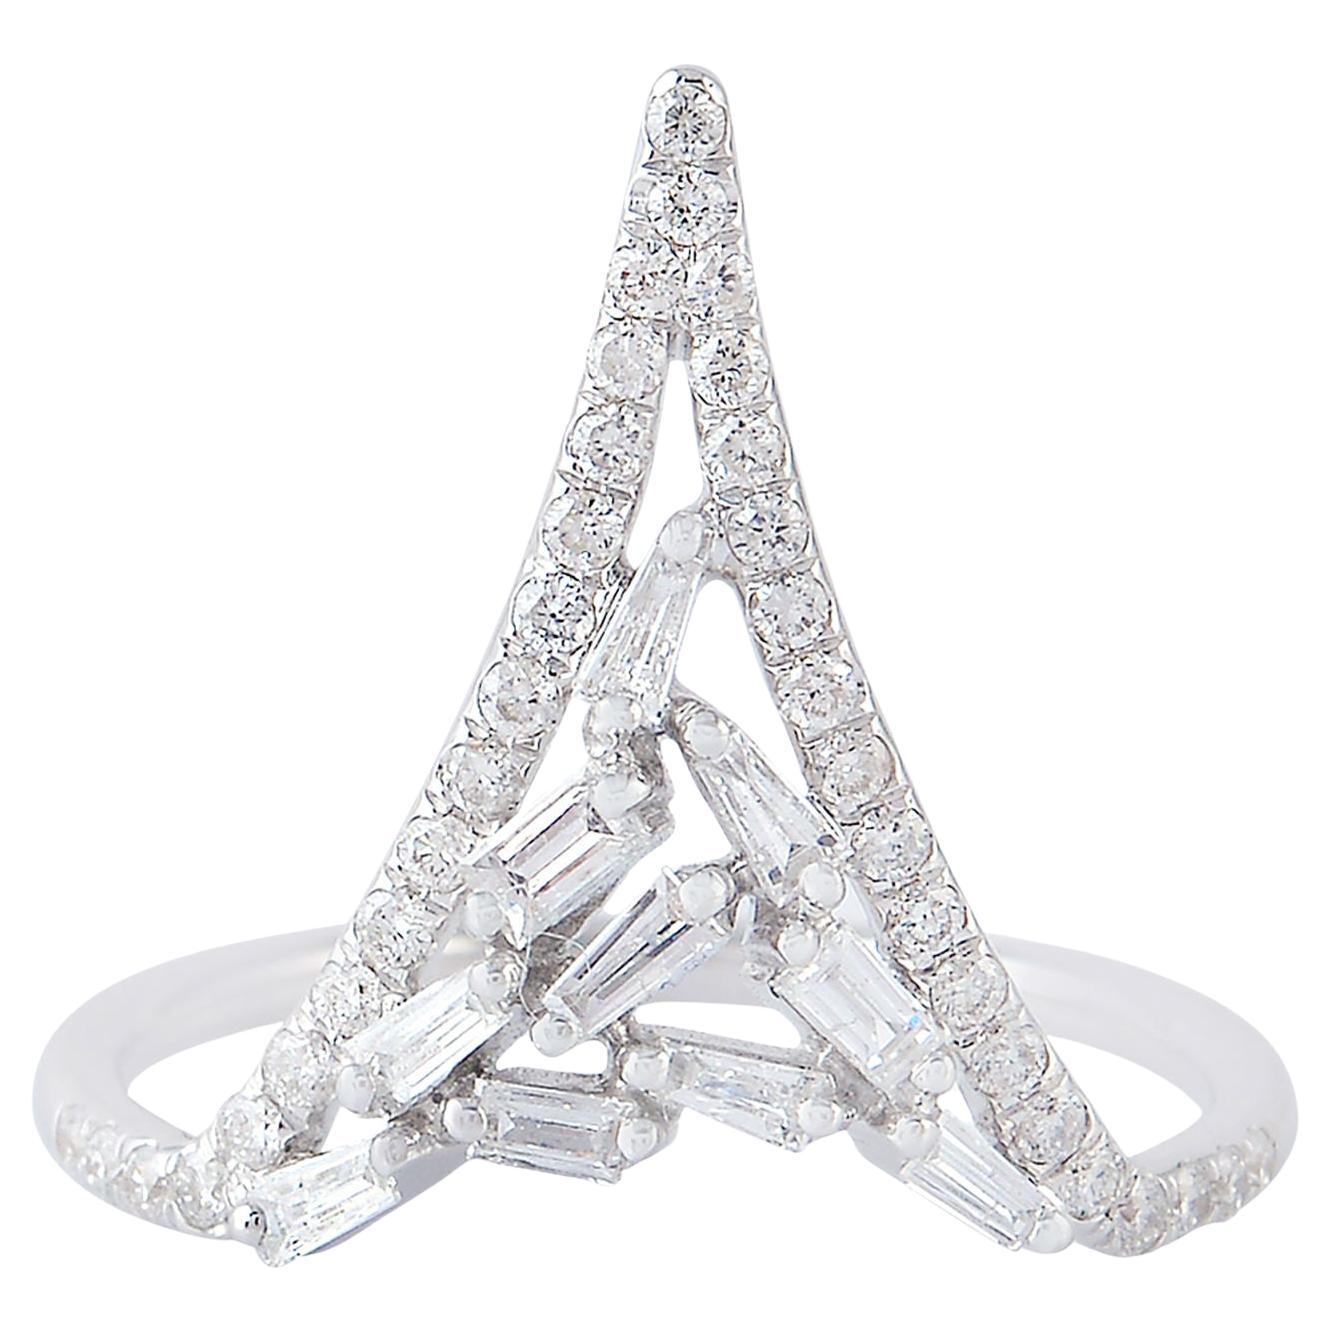 V Shaped Geometric Diamond Ring Made In 18k White Gold For Sale